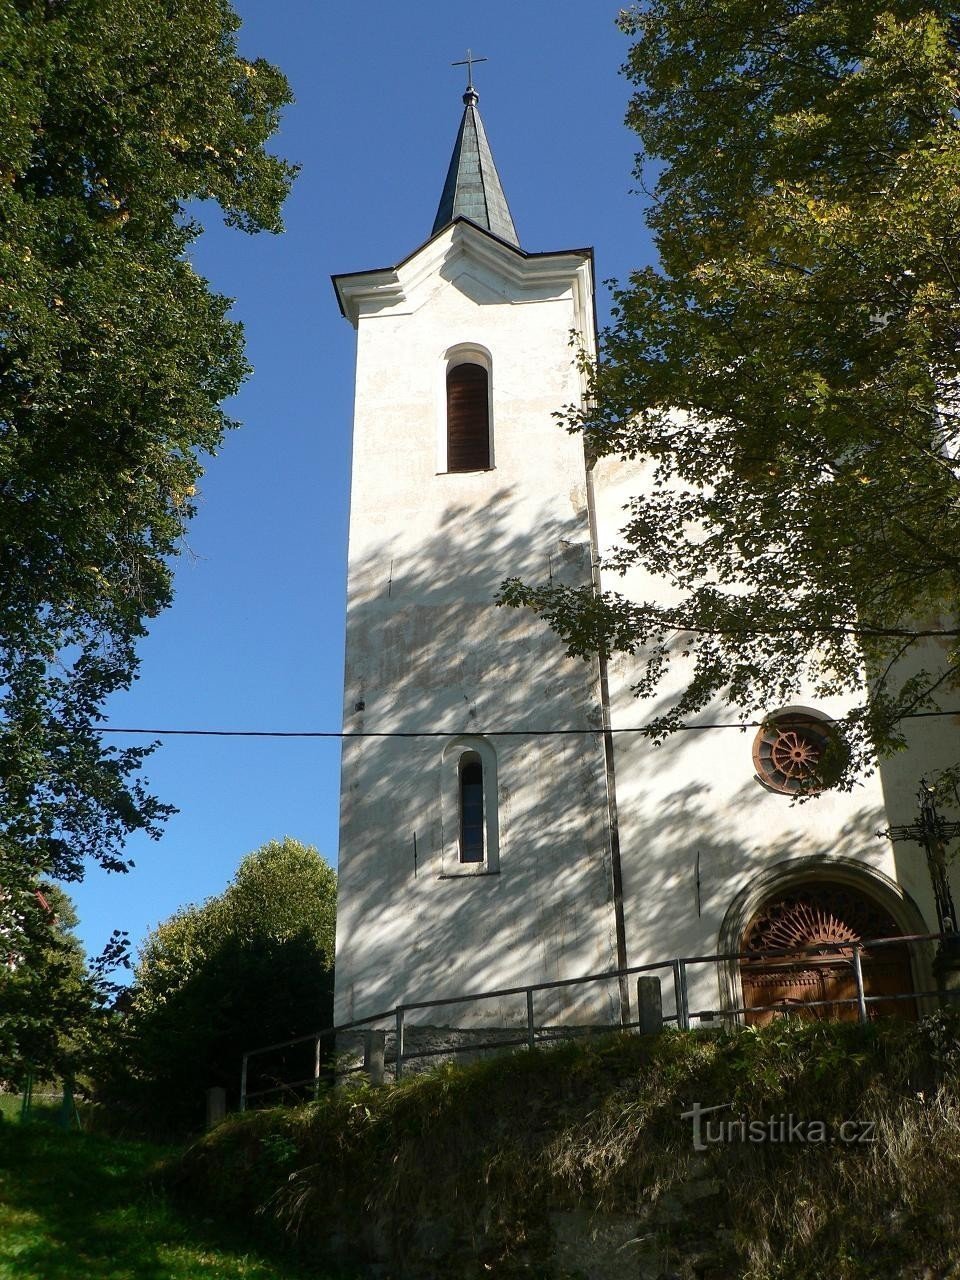 Der Turm der Kirche von P. Marie Sněžné, Kašperské Hory